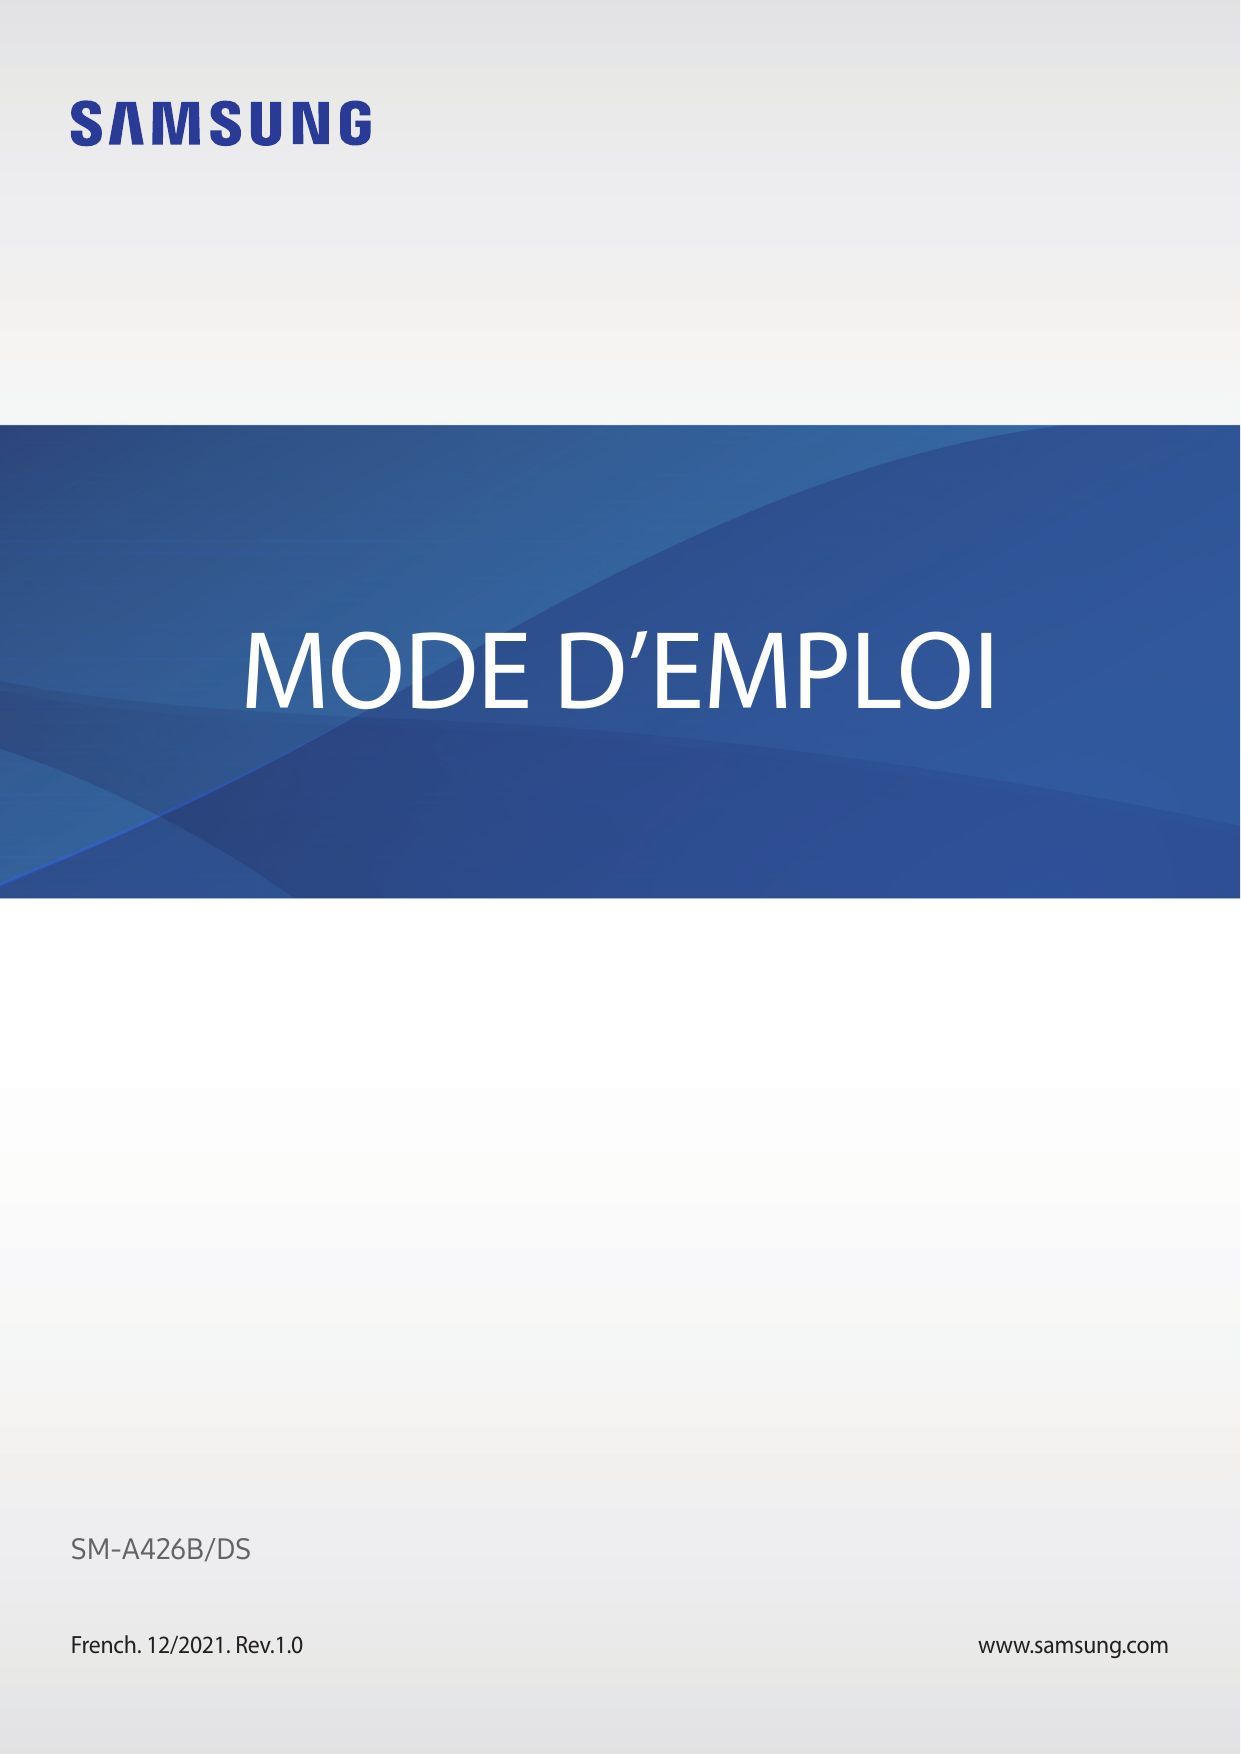 MODE D’EMPLOISM-A426B/DSFrench. 12/2021. Rev.1.0www.samsung.com